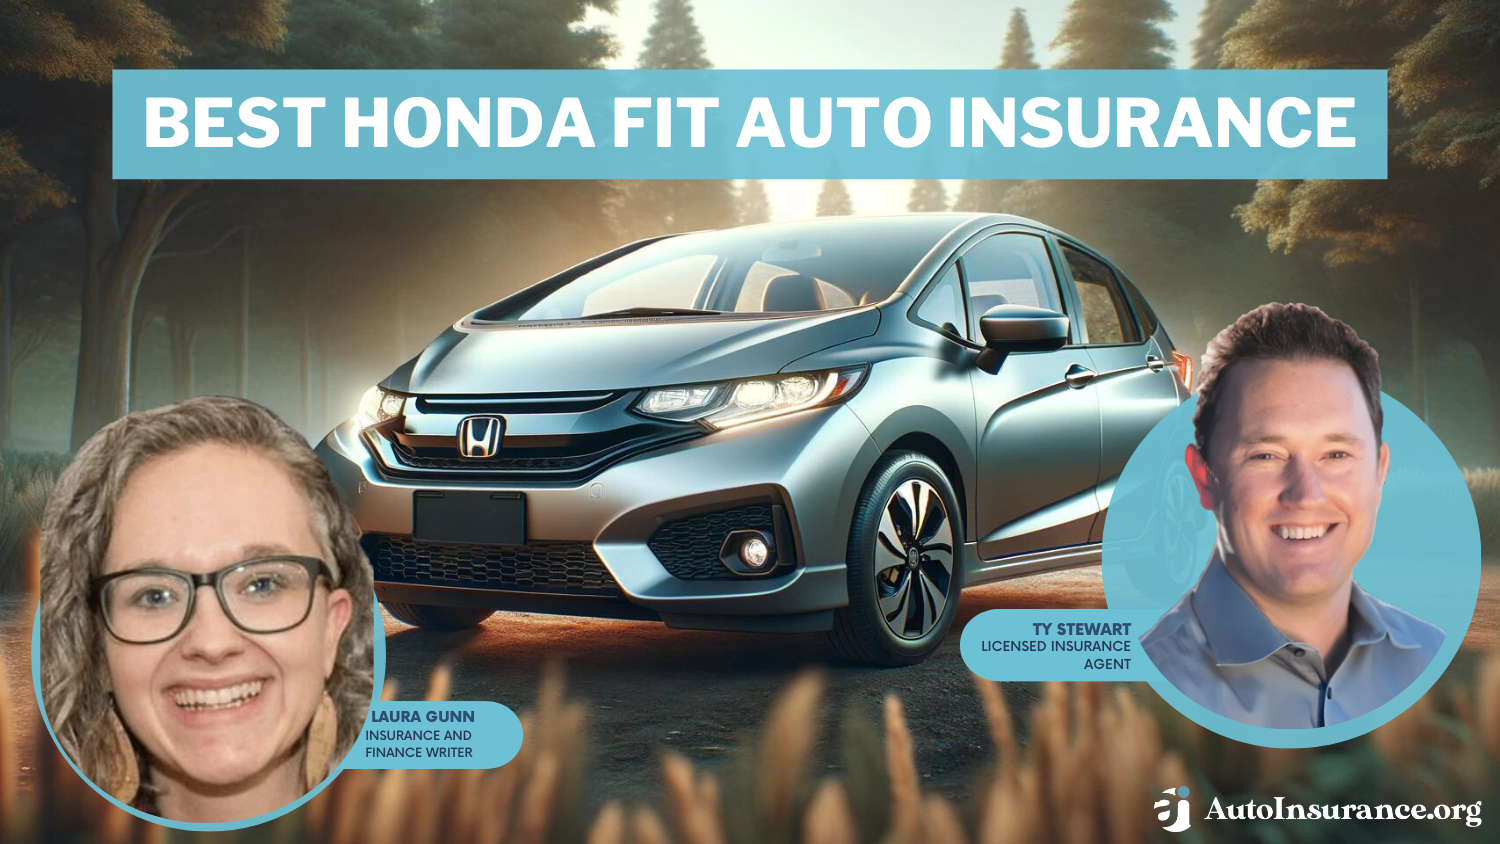 Best Honda Fit Auto Insurance: State Farm, Progressive, and Geico